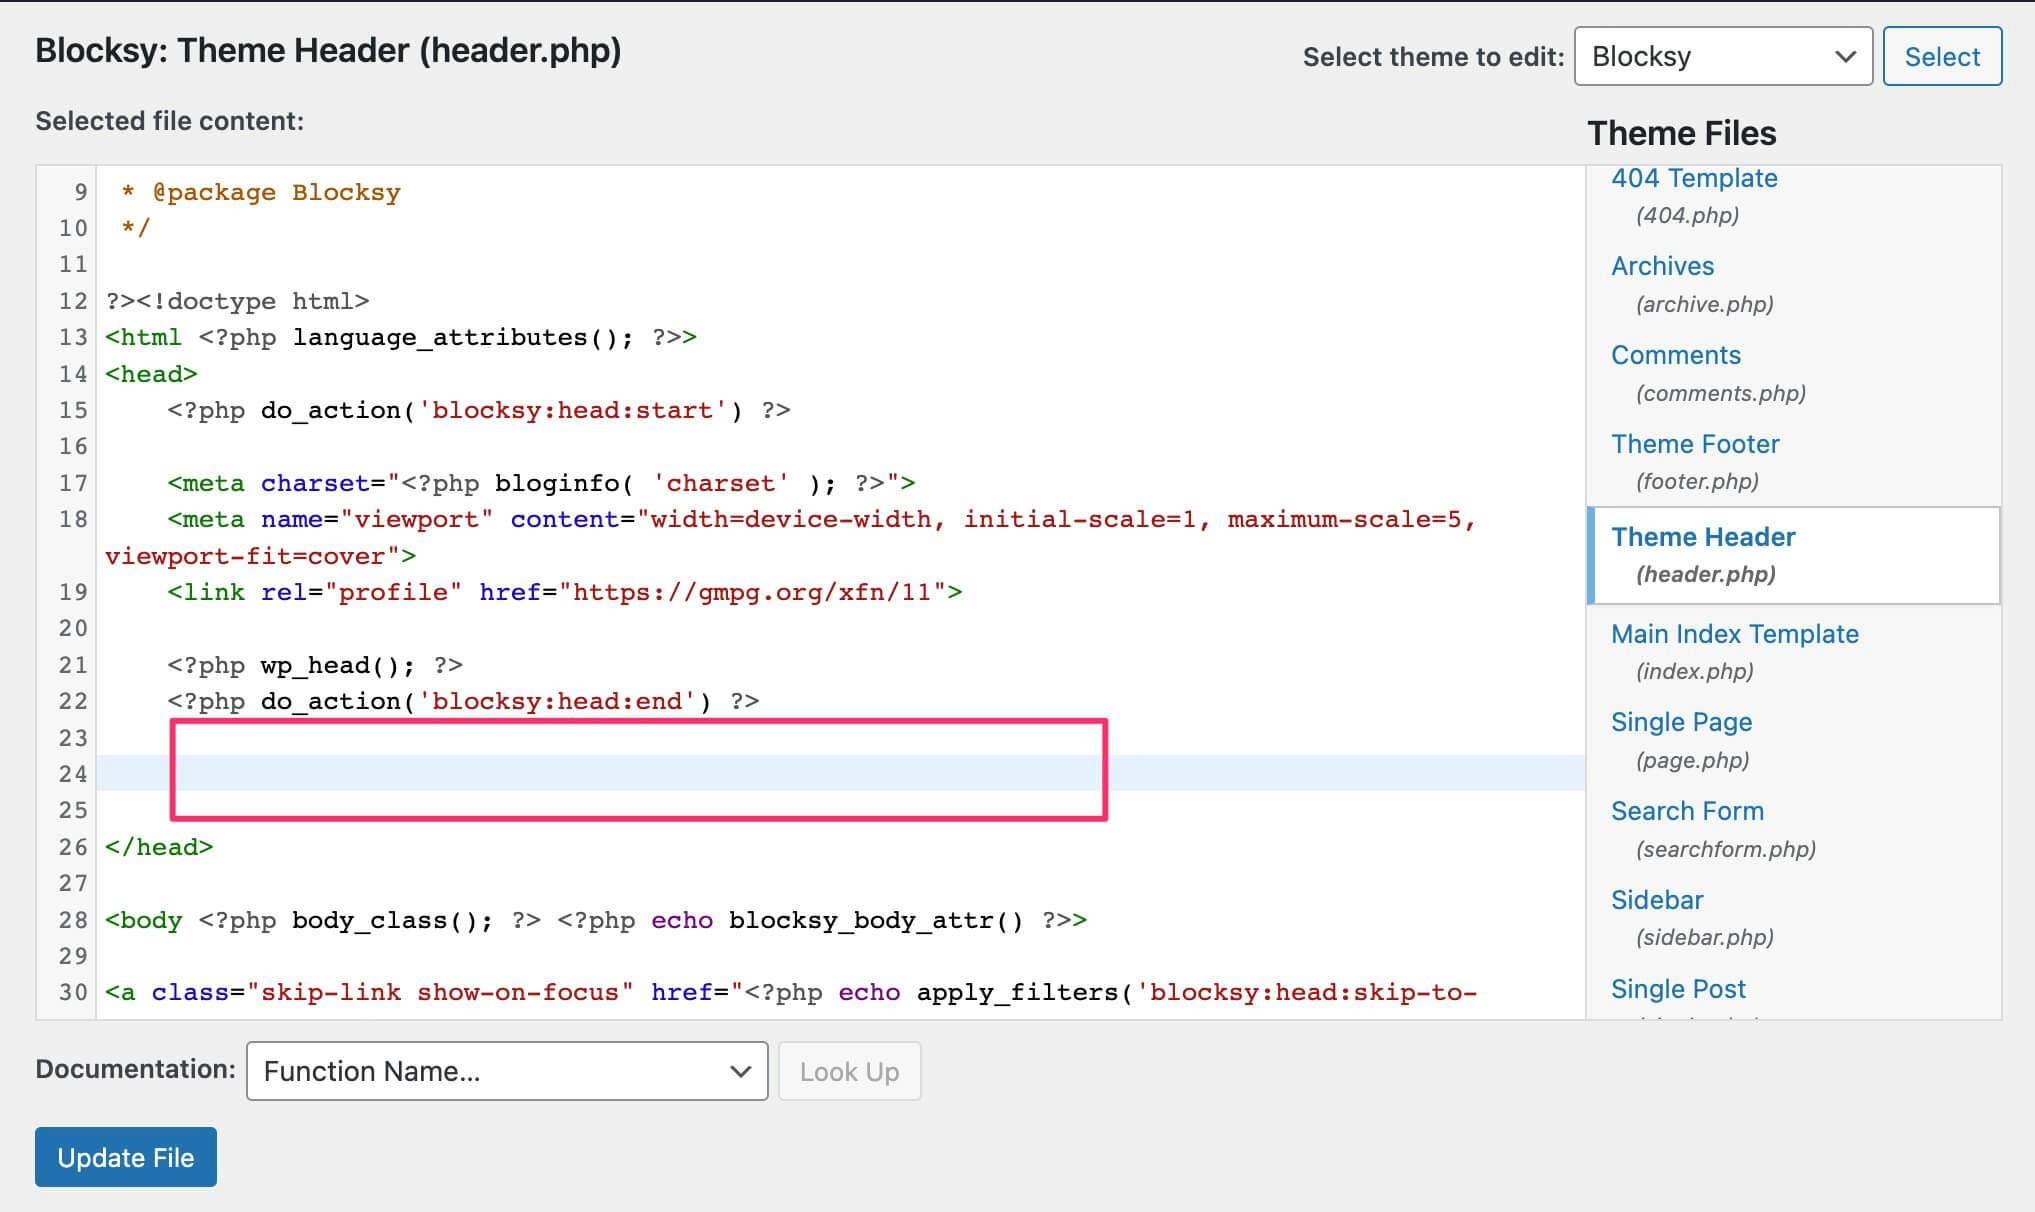 paste chatling embed code in header.php wordpress file